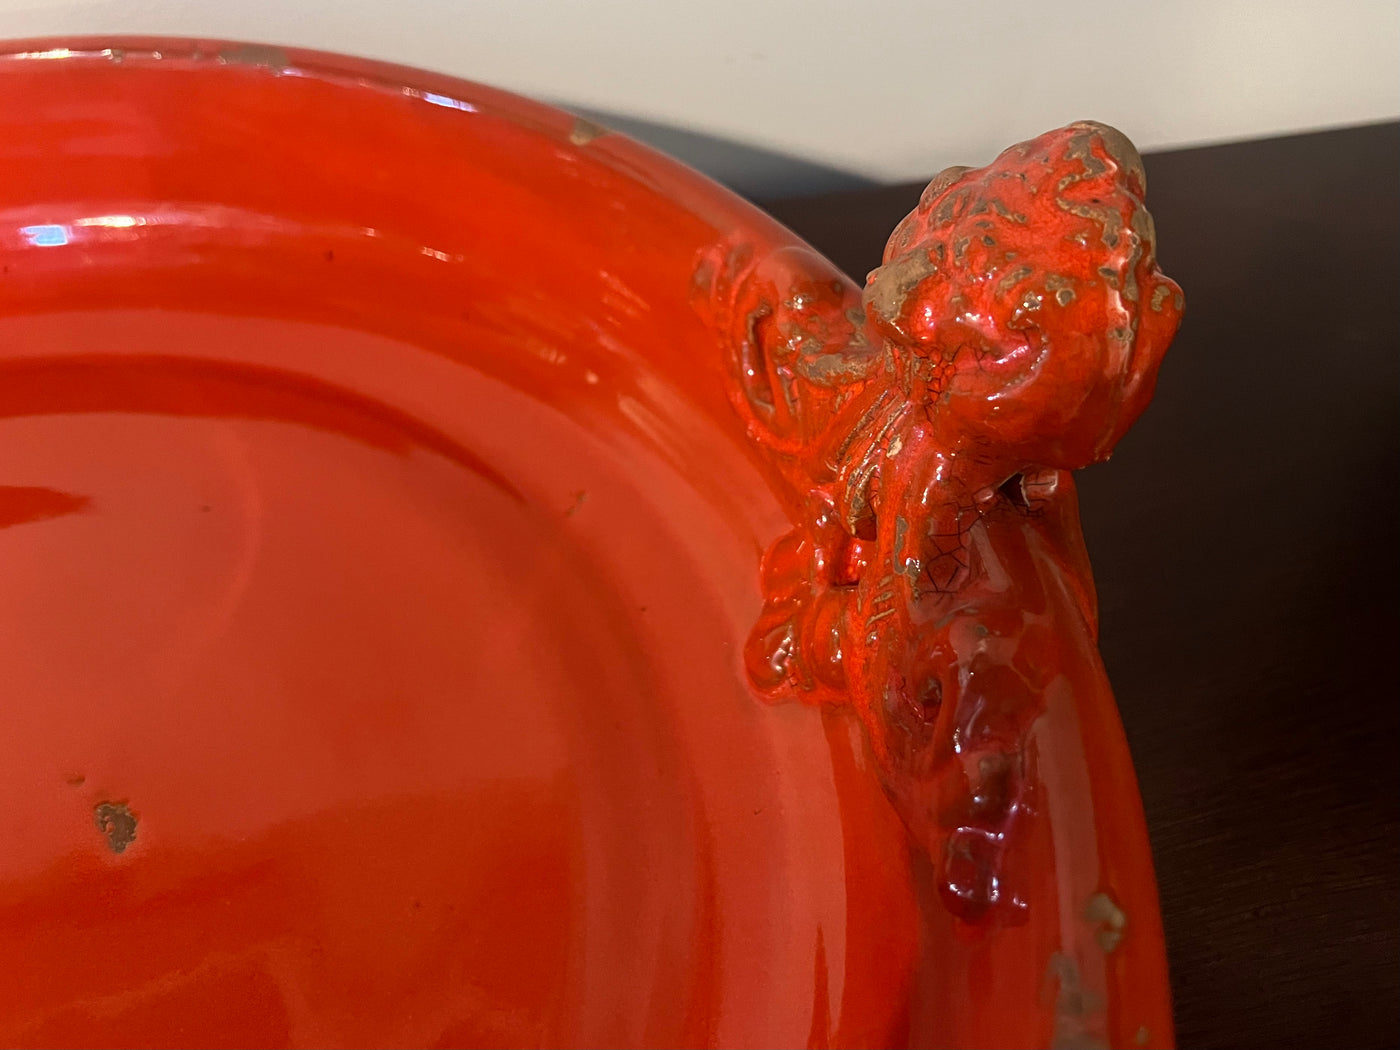 Red Fortunata Italian Ceramic Bowl